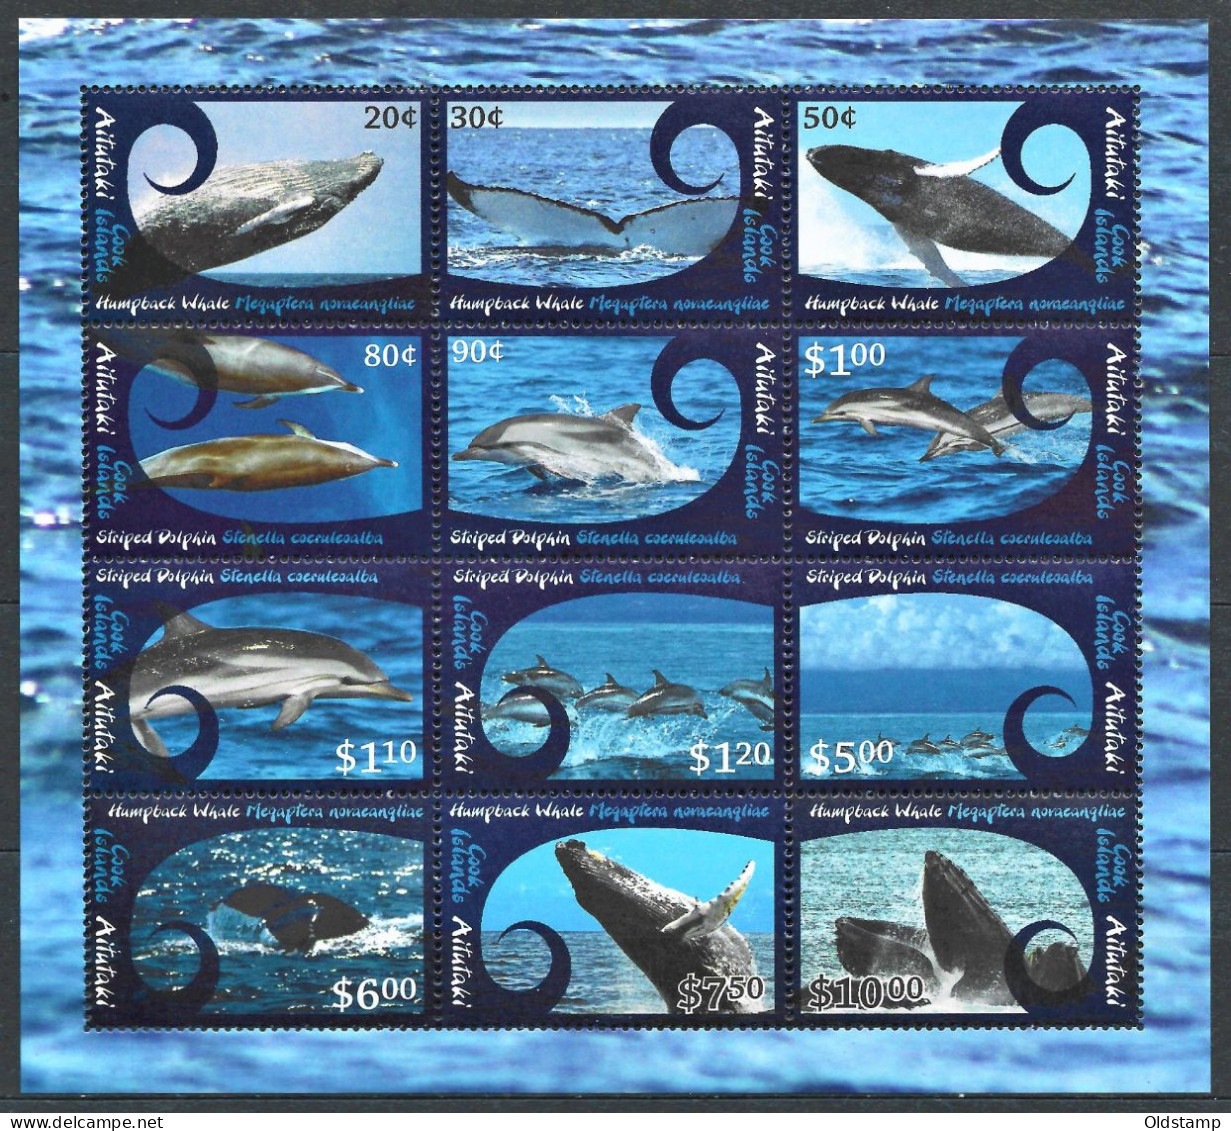 Cook Islands Aitutaki 2012 MNH LUXE Dolphins Whales Marine Life Oceans Mammals Animals Fauna Stamps Block Full Set Sheet - Marine Life